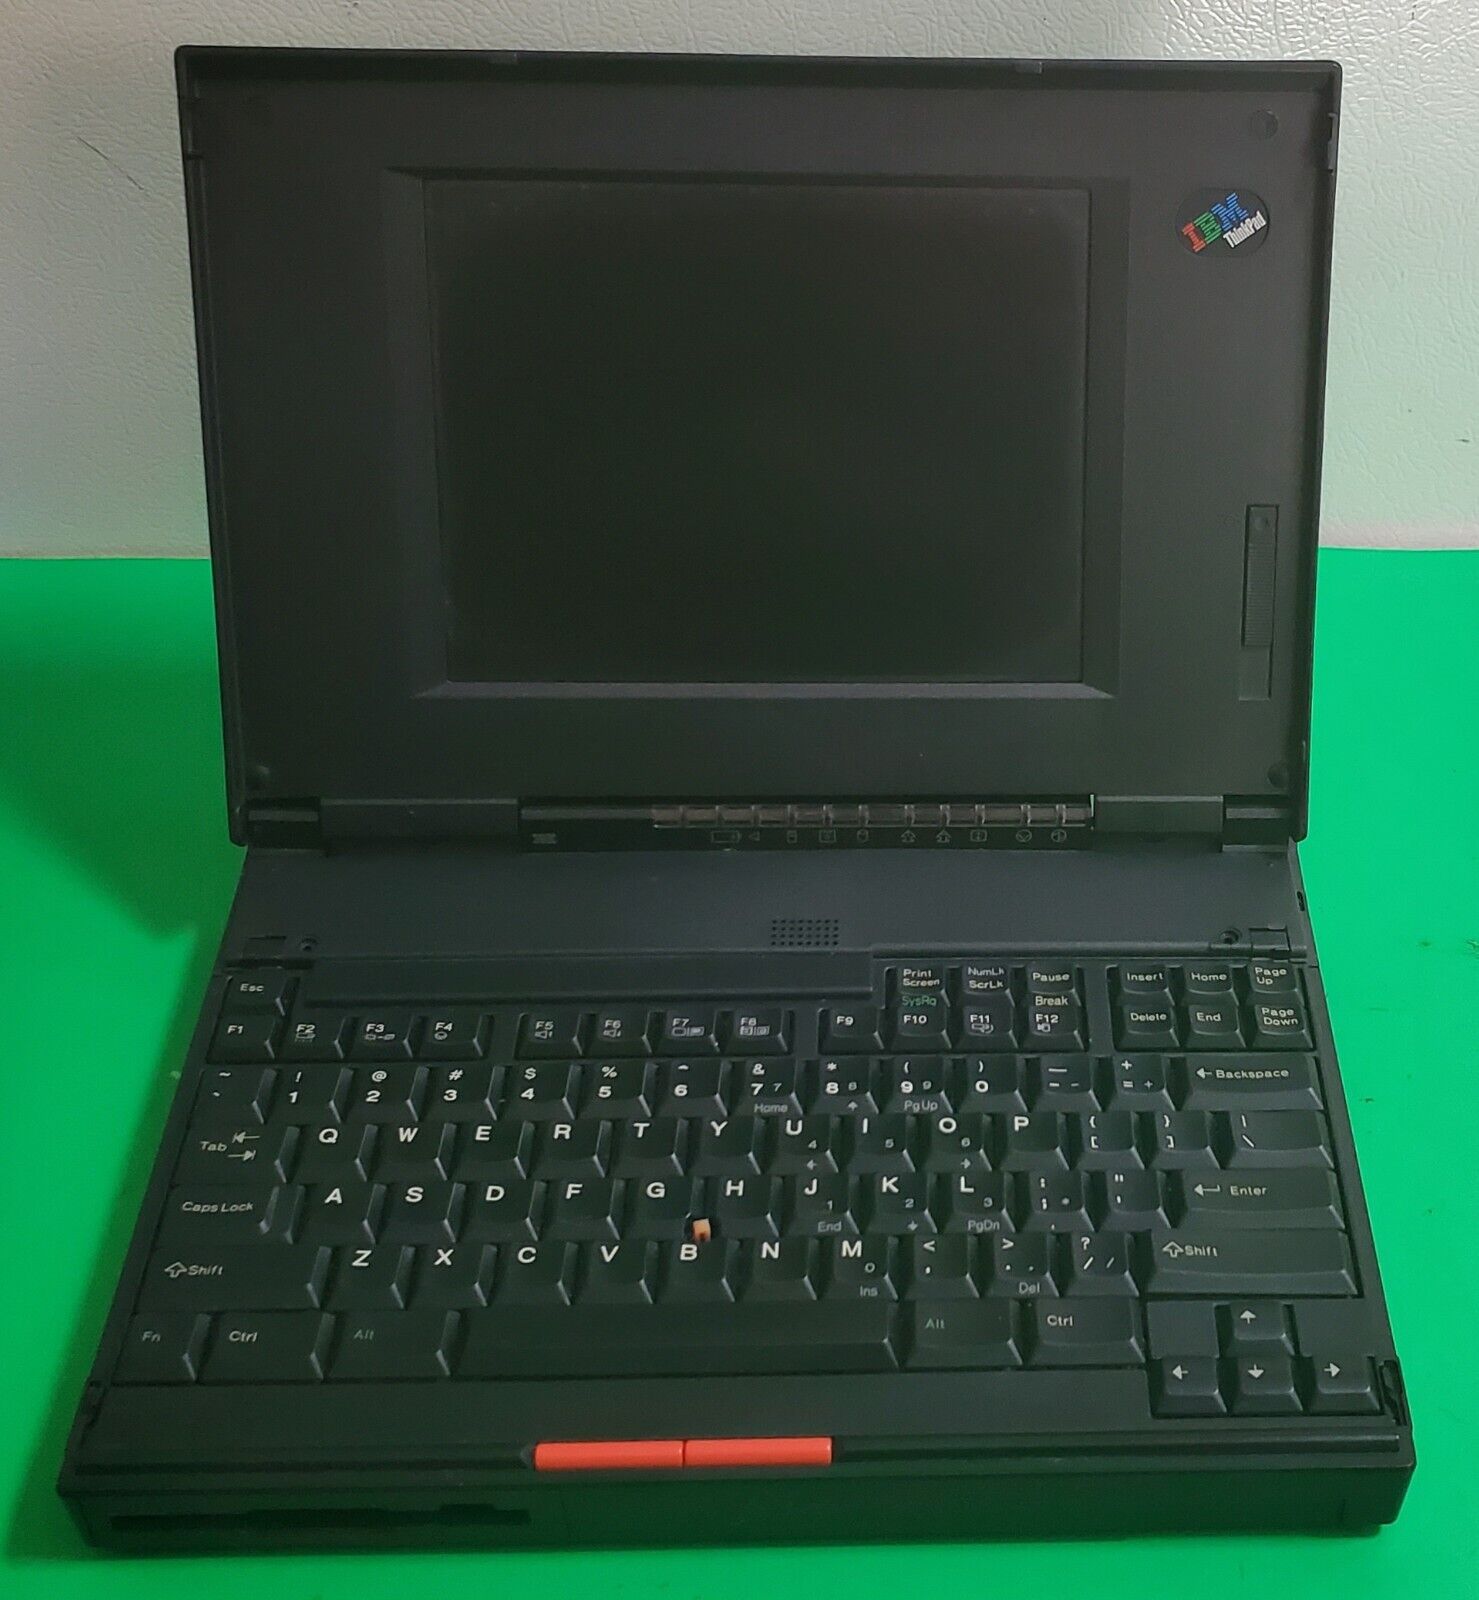 IBM Thinkpad 360C Type 2620 Notebook Laptop Computer Vintage Retro - as is